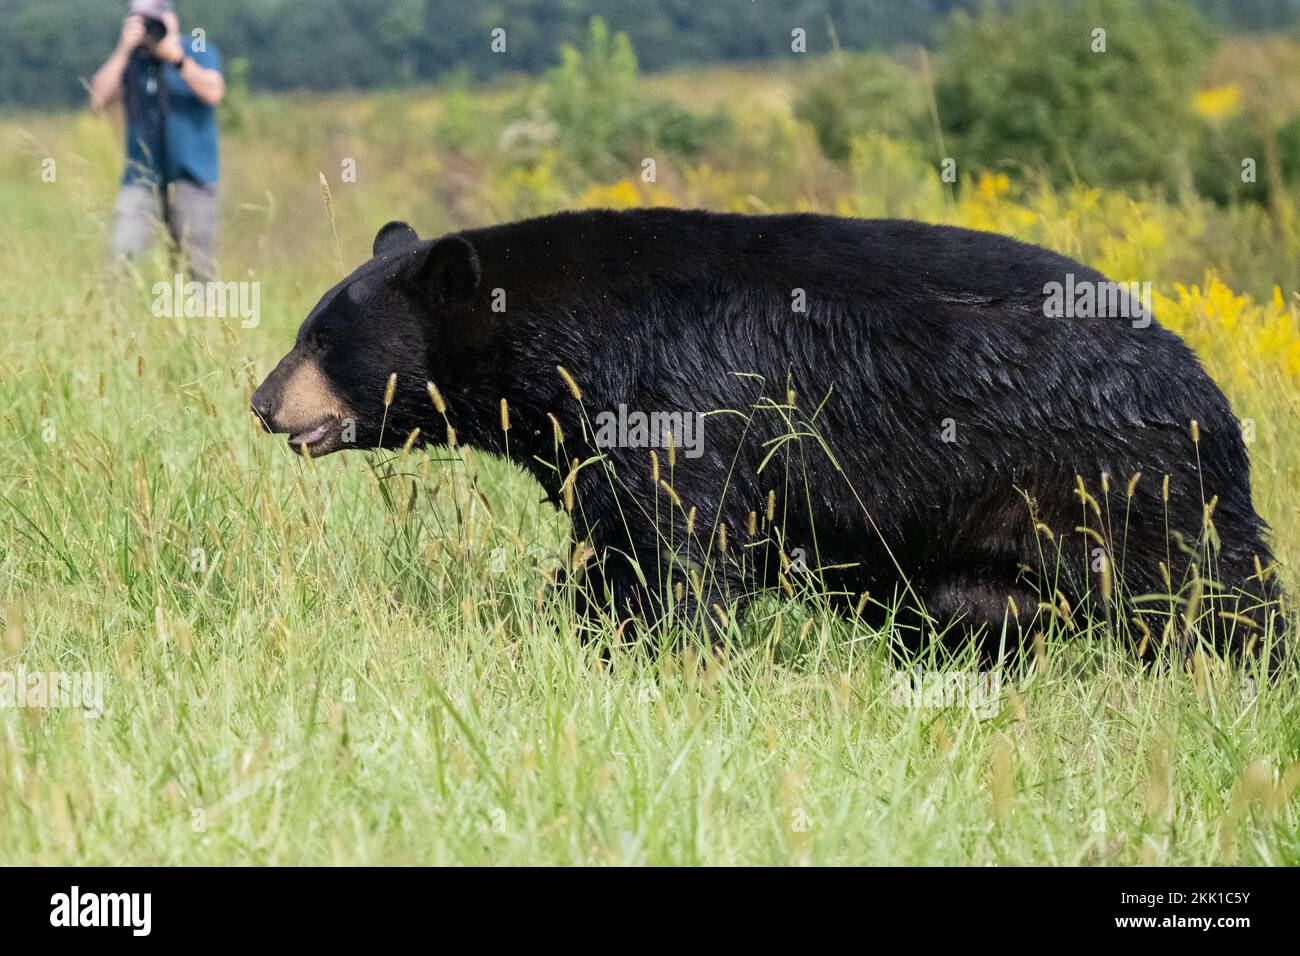 American Black Bear (Ursus americanus) walking in tall grass wiht photographer in background Stock Photo